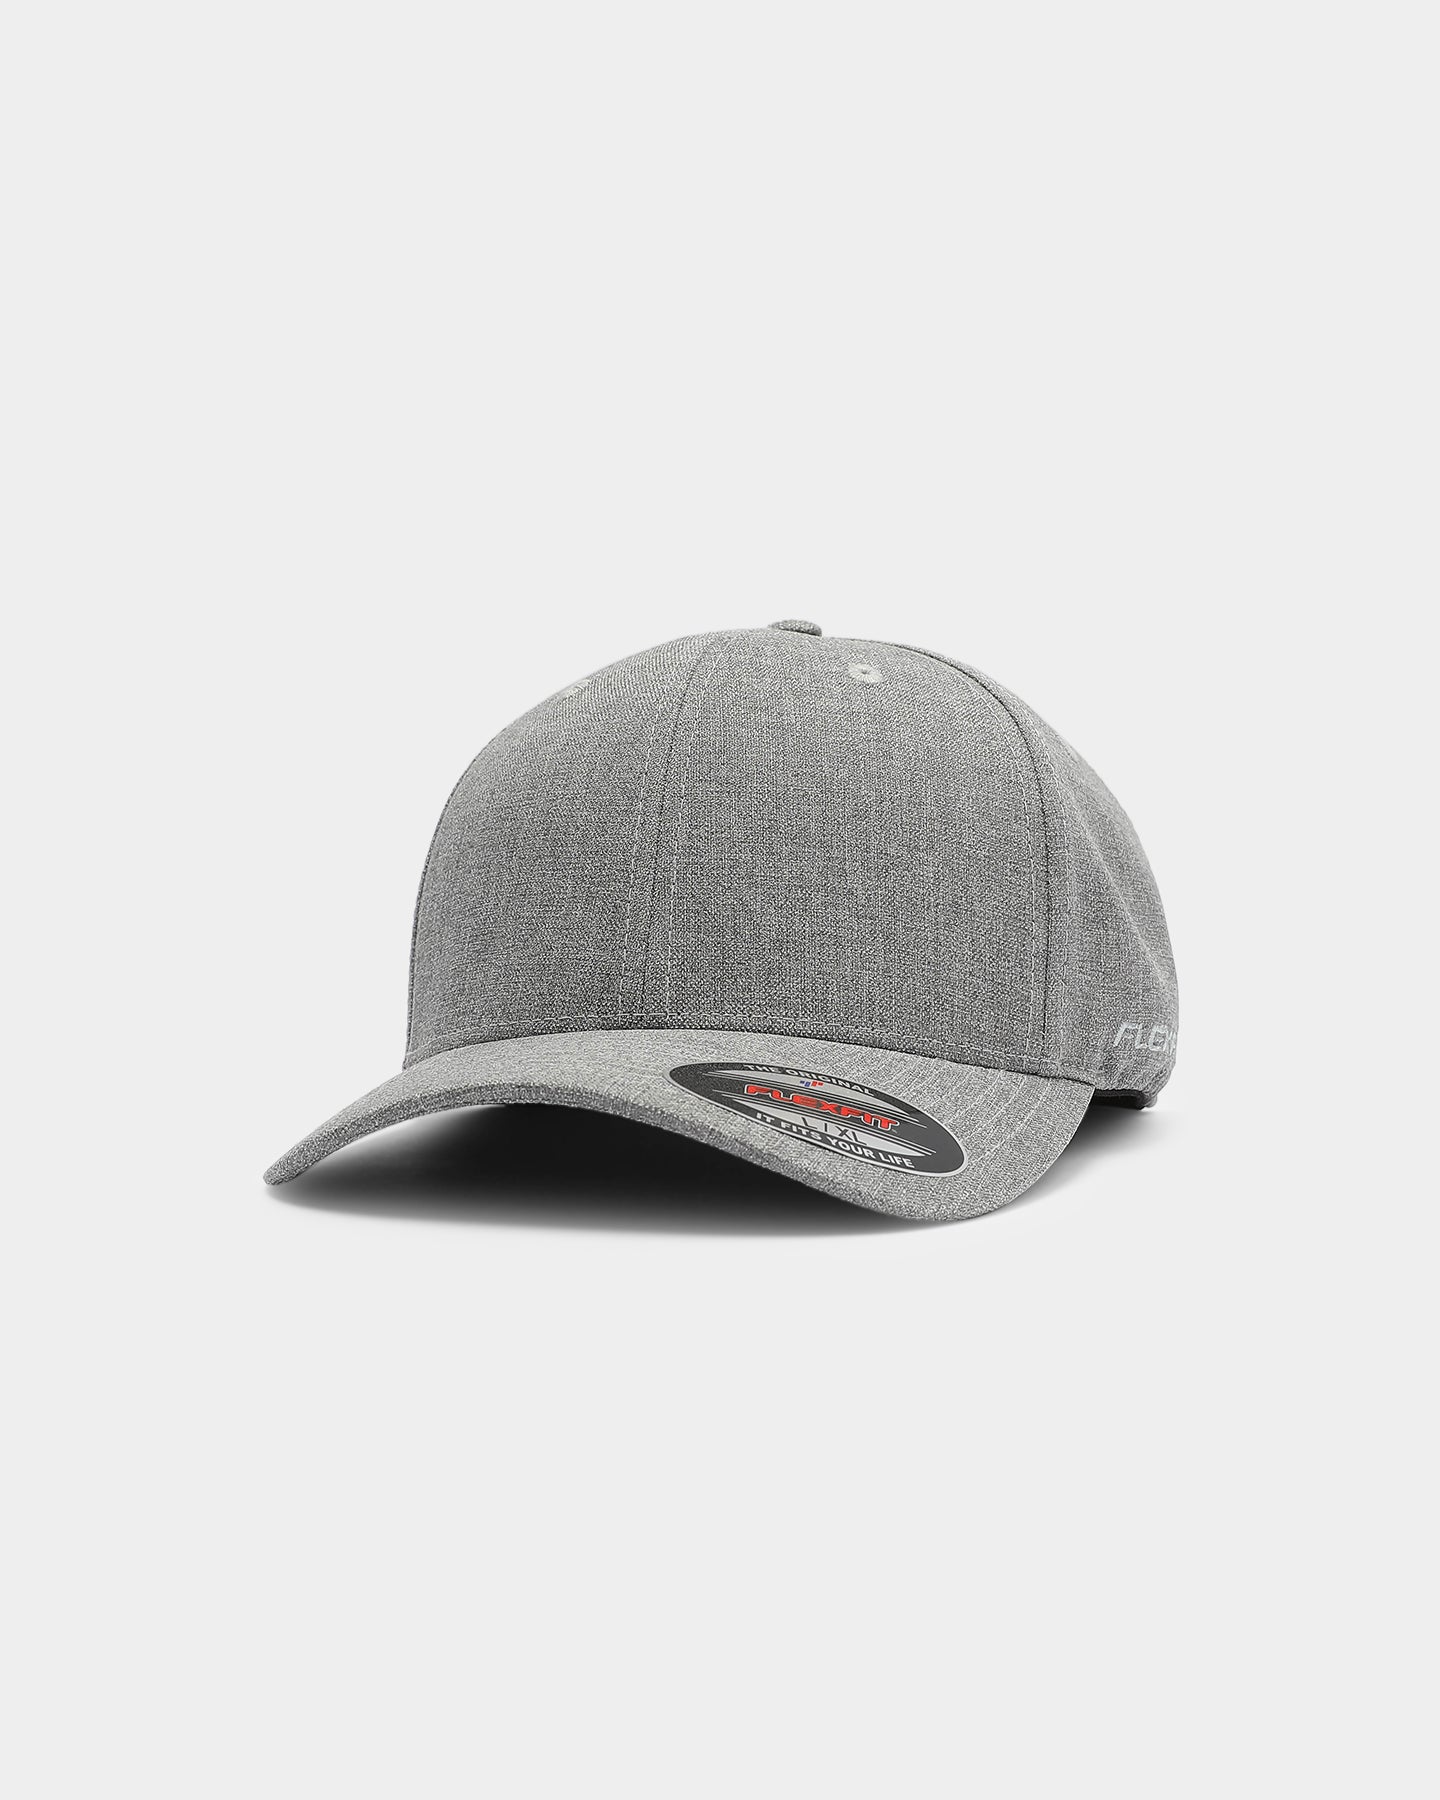 Men/'s Blank Stretch Cap Flexfit Precurved Hat Red